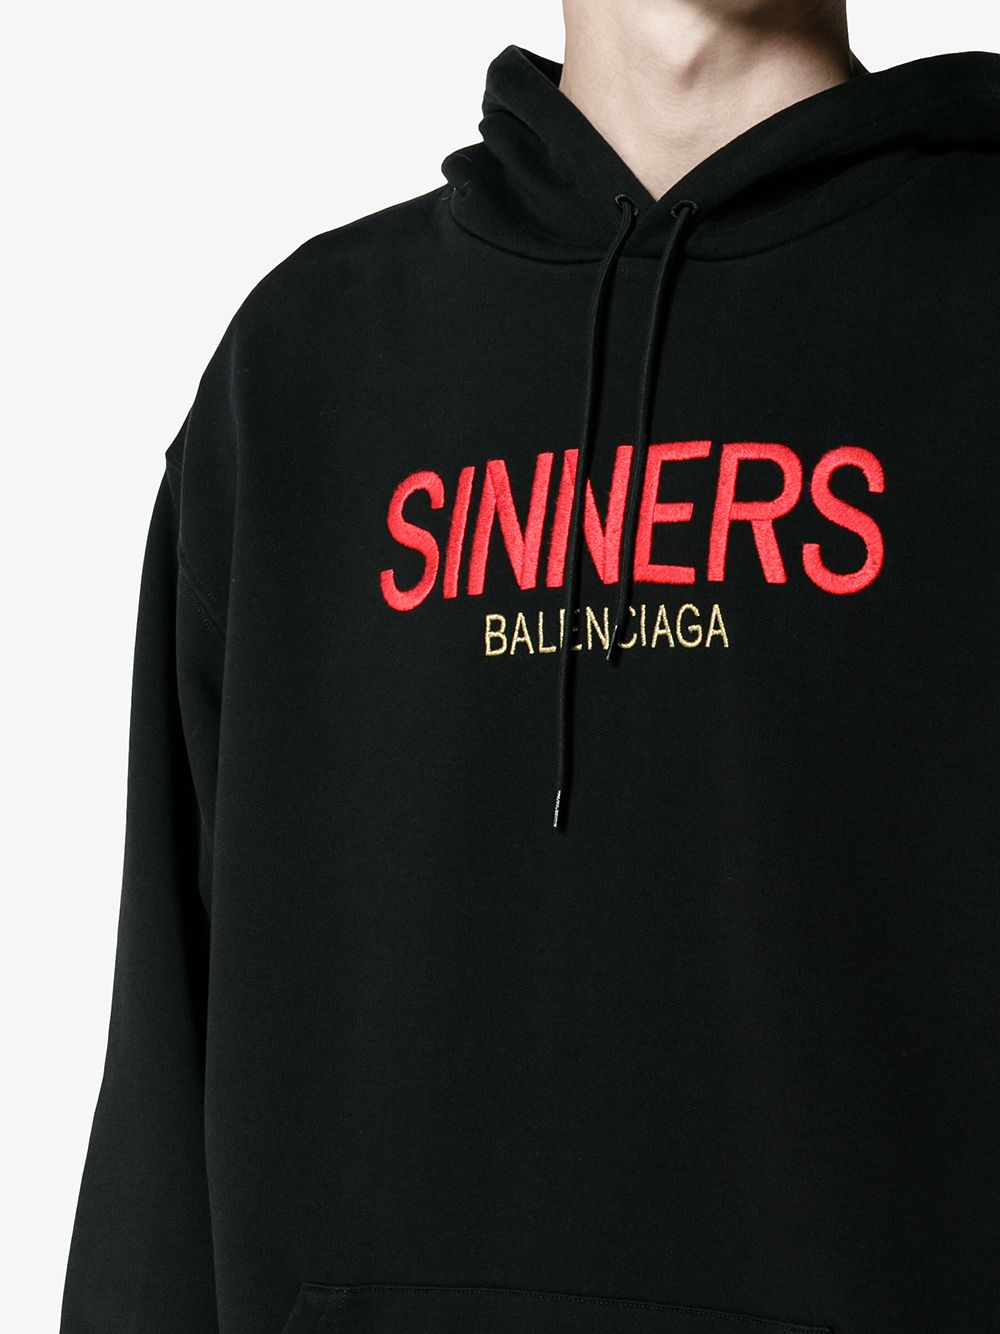 Balenciaga Sinners Hoodie $995 - Buy 